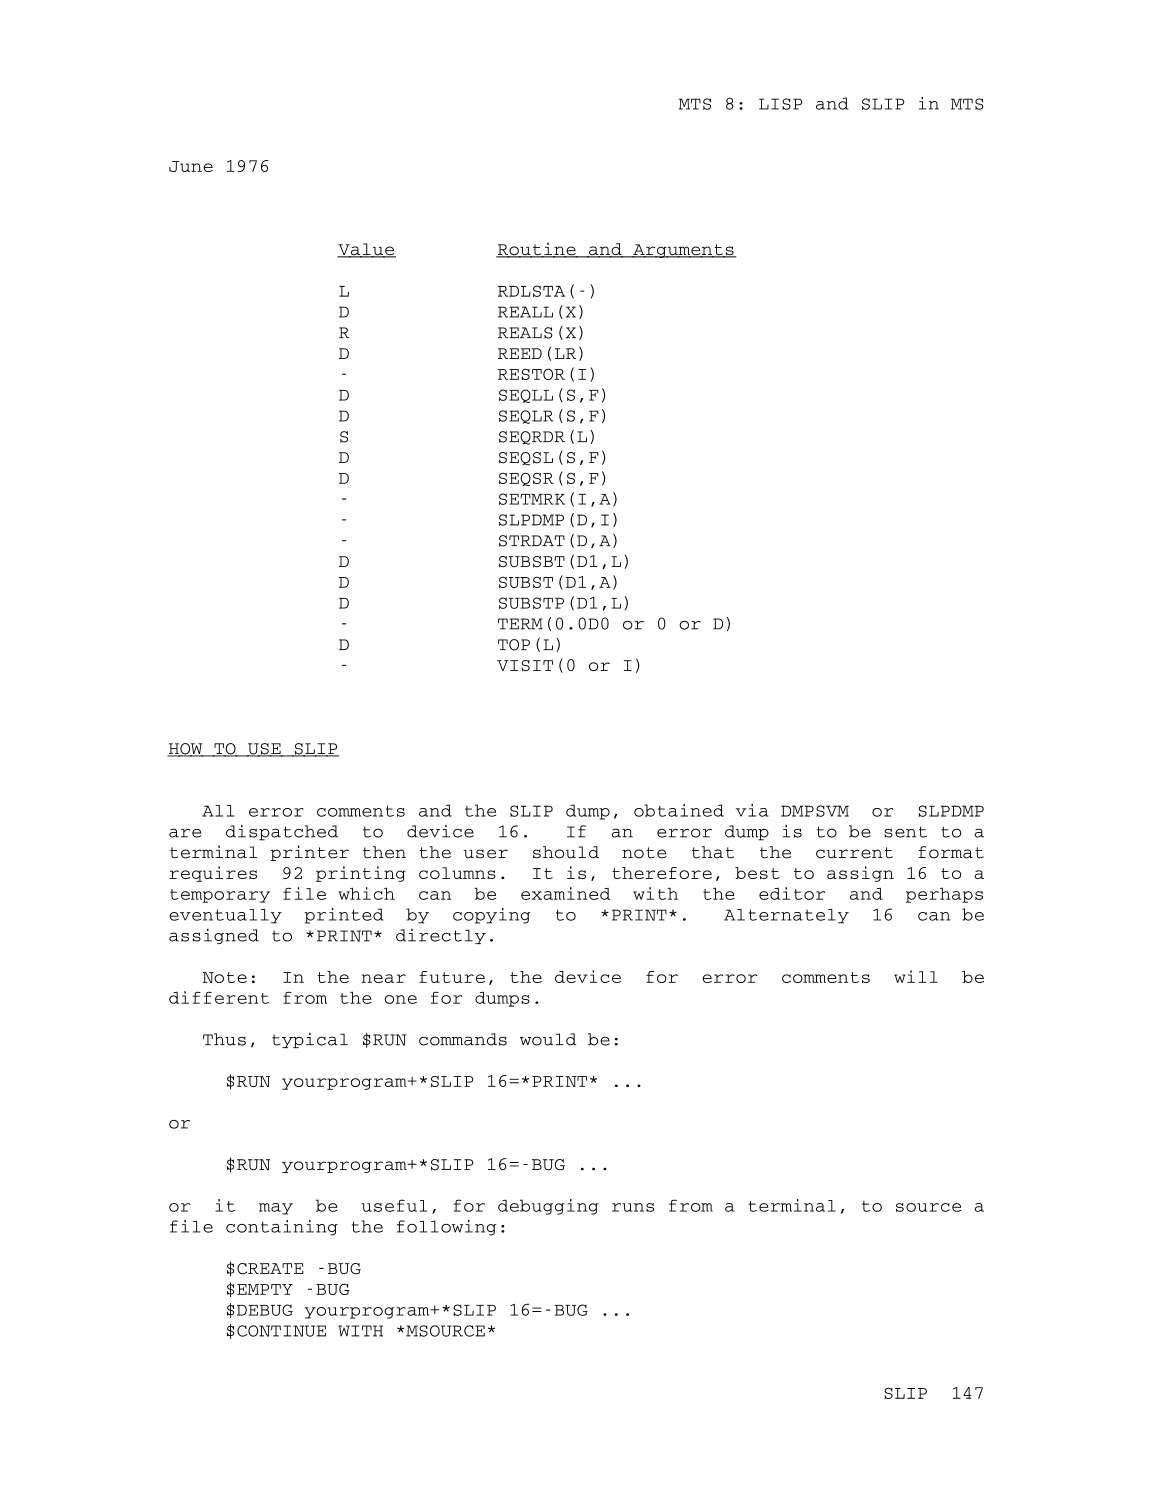 MTS Volume 8 - LISP and SLIP page 146